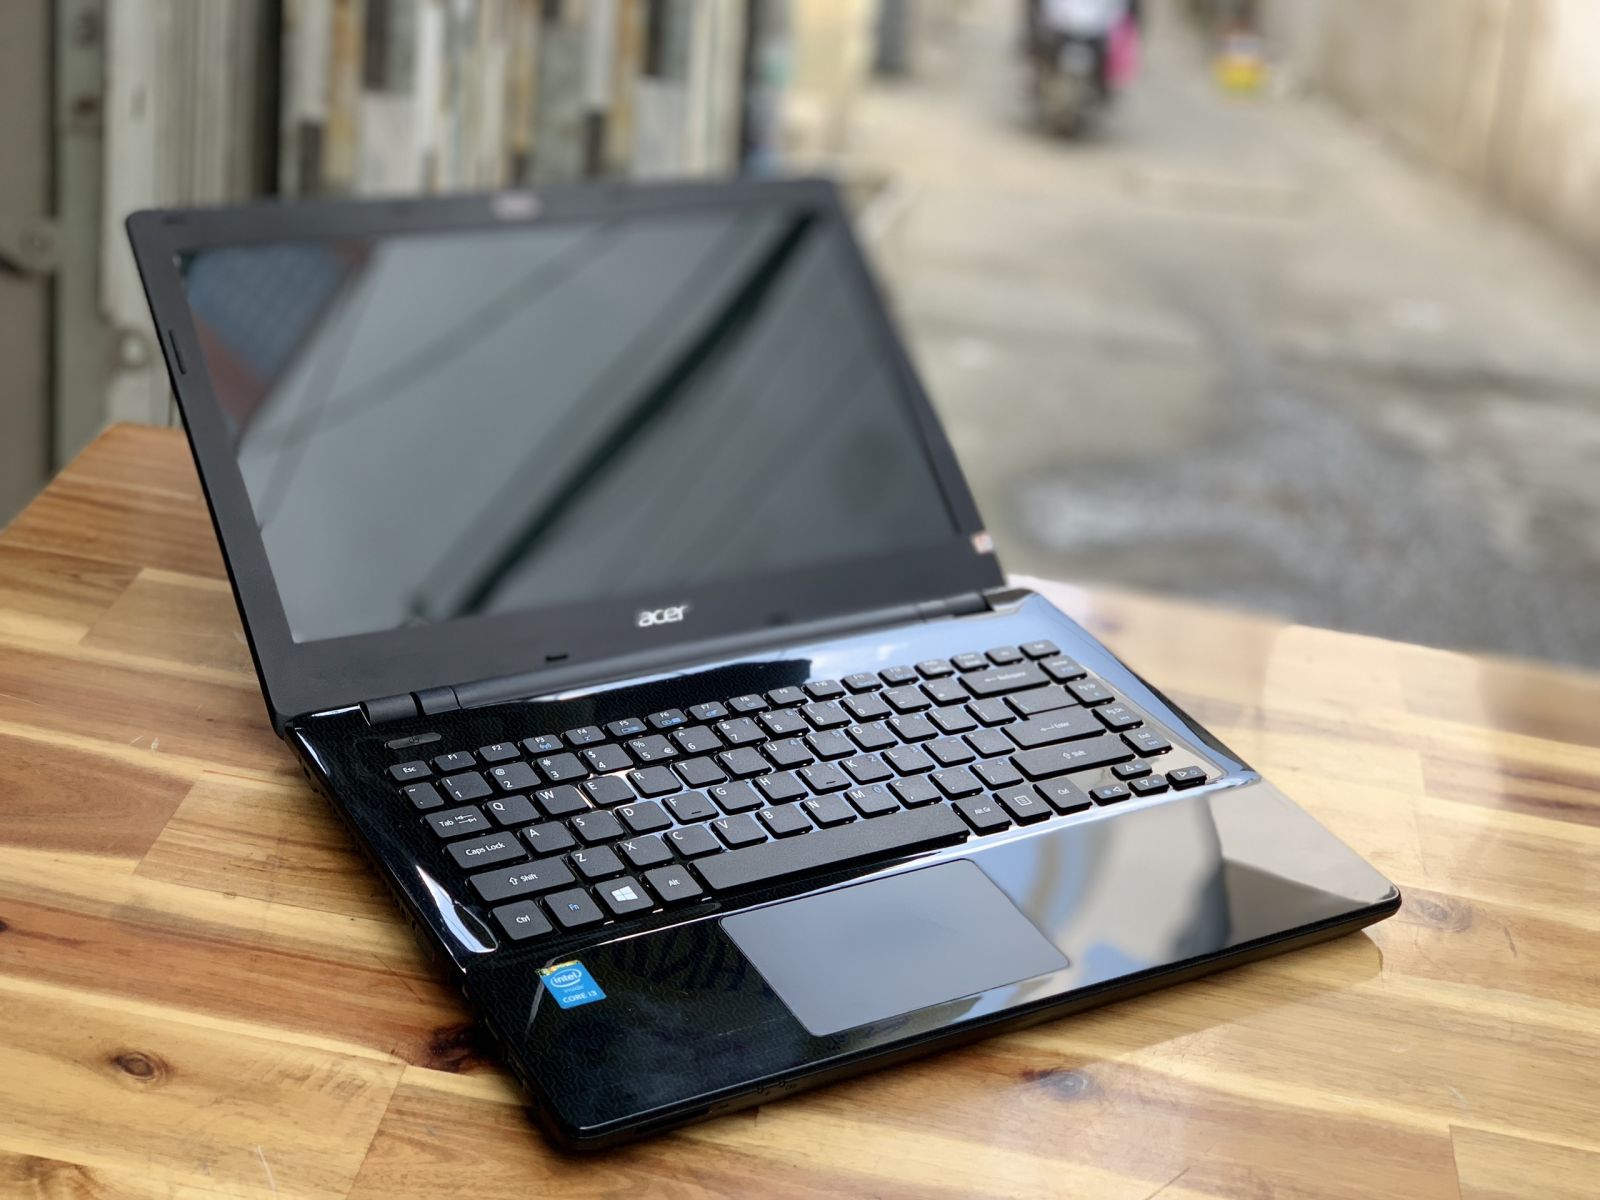 Laptop Acer E5-471/ i5 4210U/ 4G/ 500G/ 14in/ Đẹp Keng/ Zin 100%/ Giá rẻ2